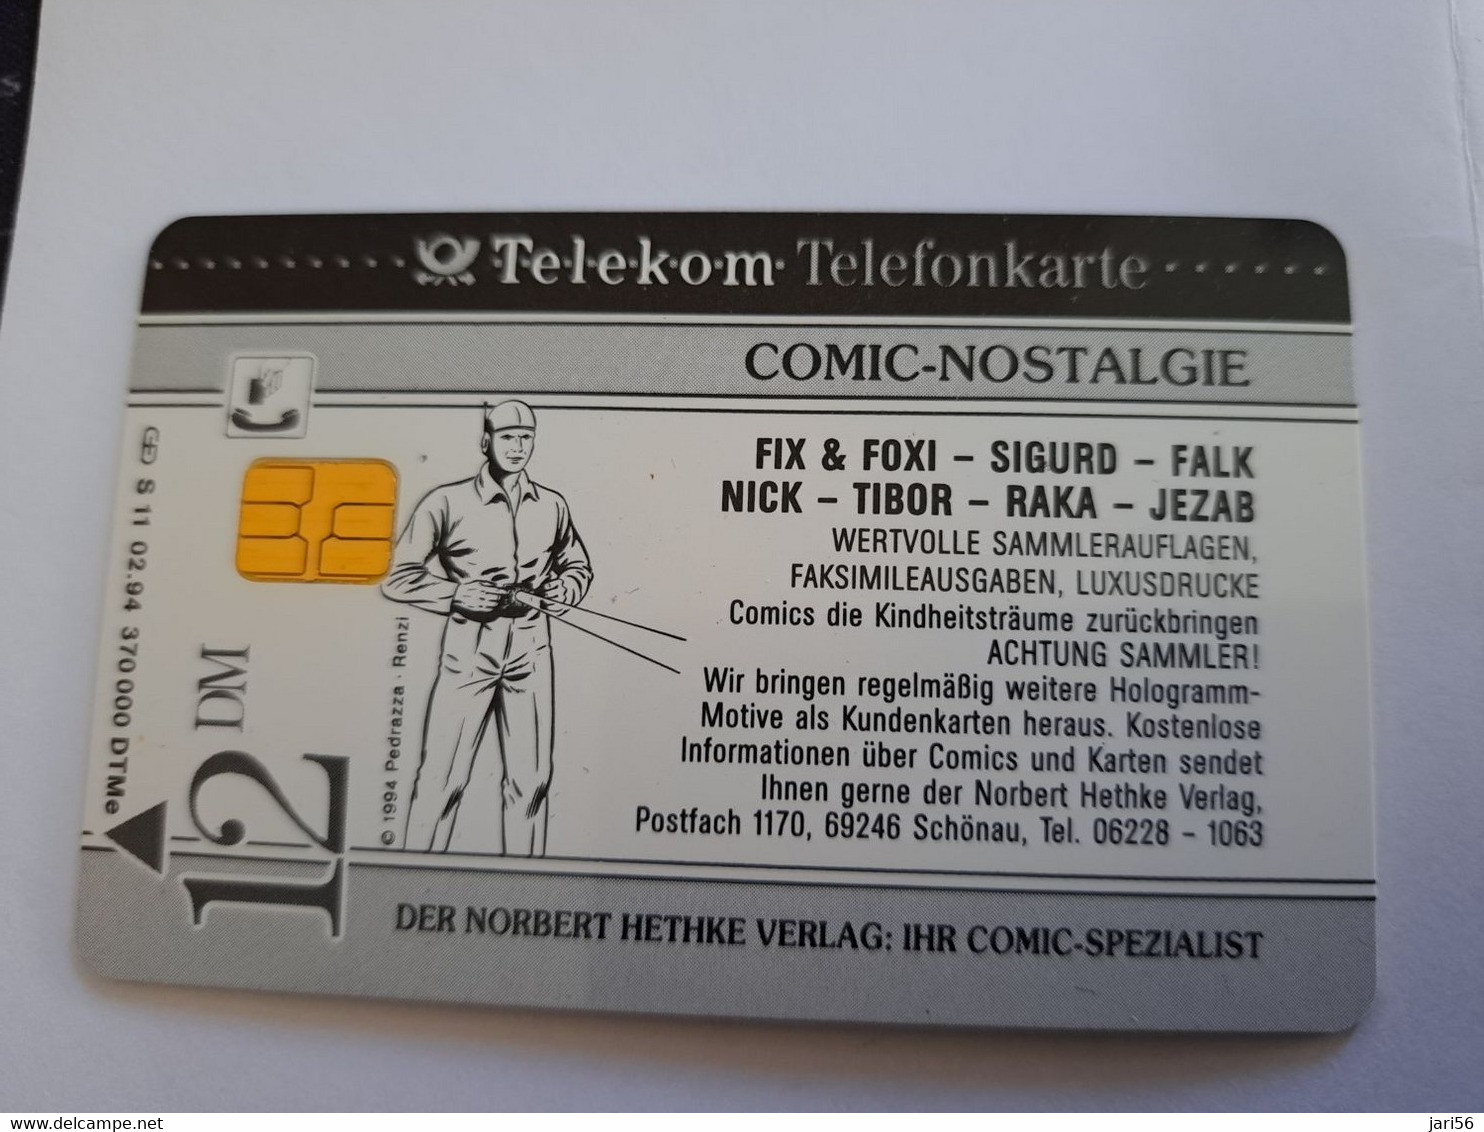 DUITSLAND/ GERMANY  CHIPCARD /COMIC/MARVEL SUPERHEROES /FULGOR  / 12DM / 3D SILVER  CARD / S11 MINT  CARD     **11841** - S-Series: Schalterserie Mit Fremdfirmenreklame